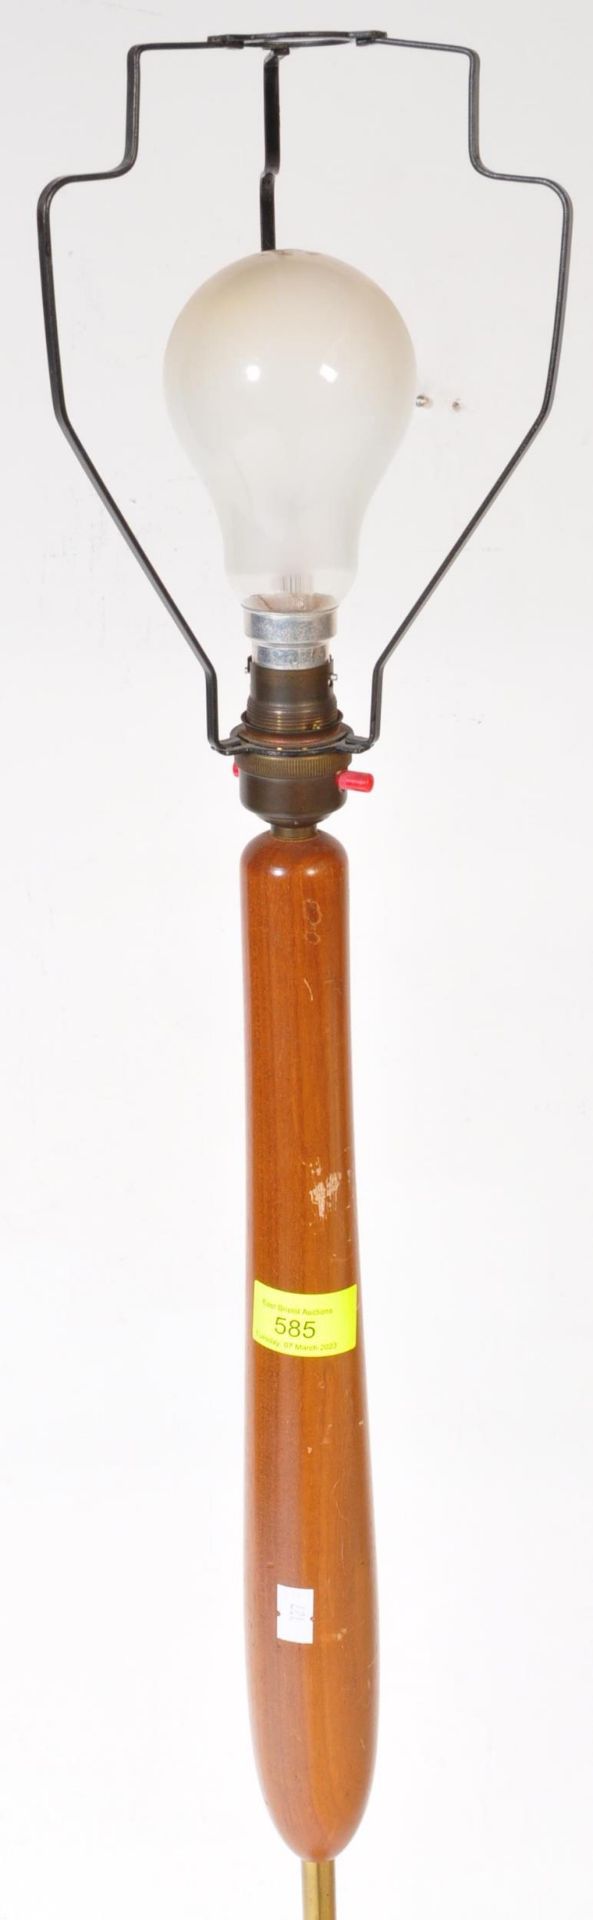 RETRO VINTAGE DANISH INSPIRED TEAK FLOOR STANDARD LAMP - Image 4 of 4